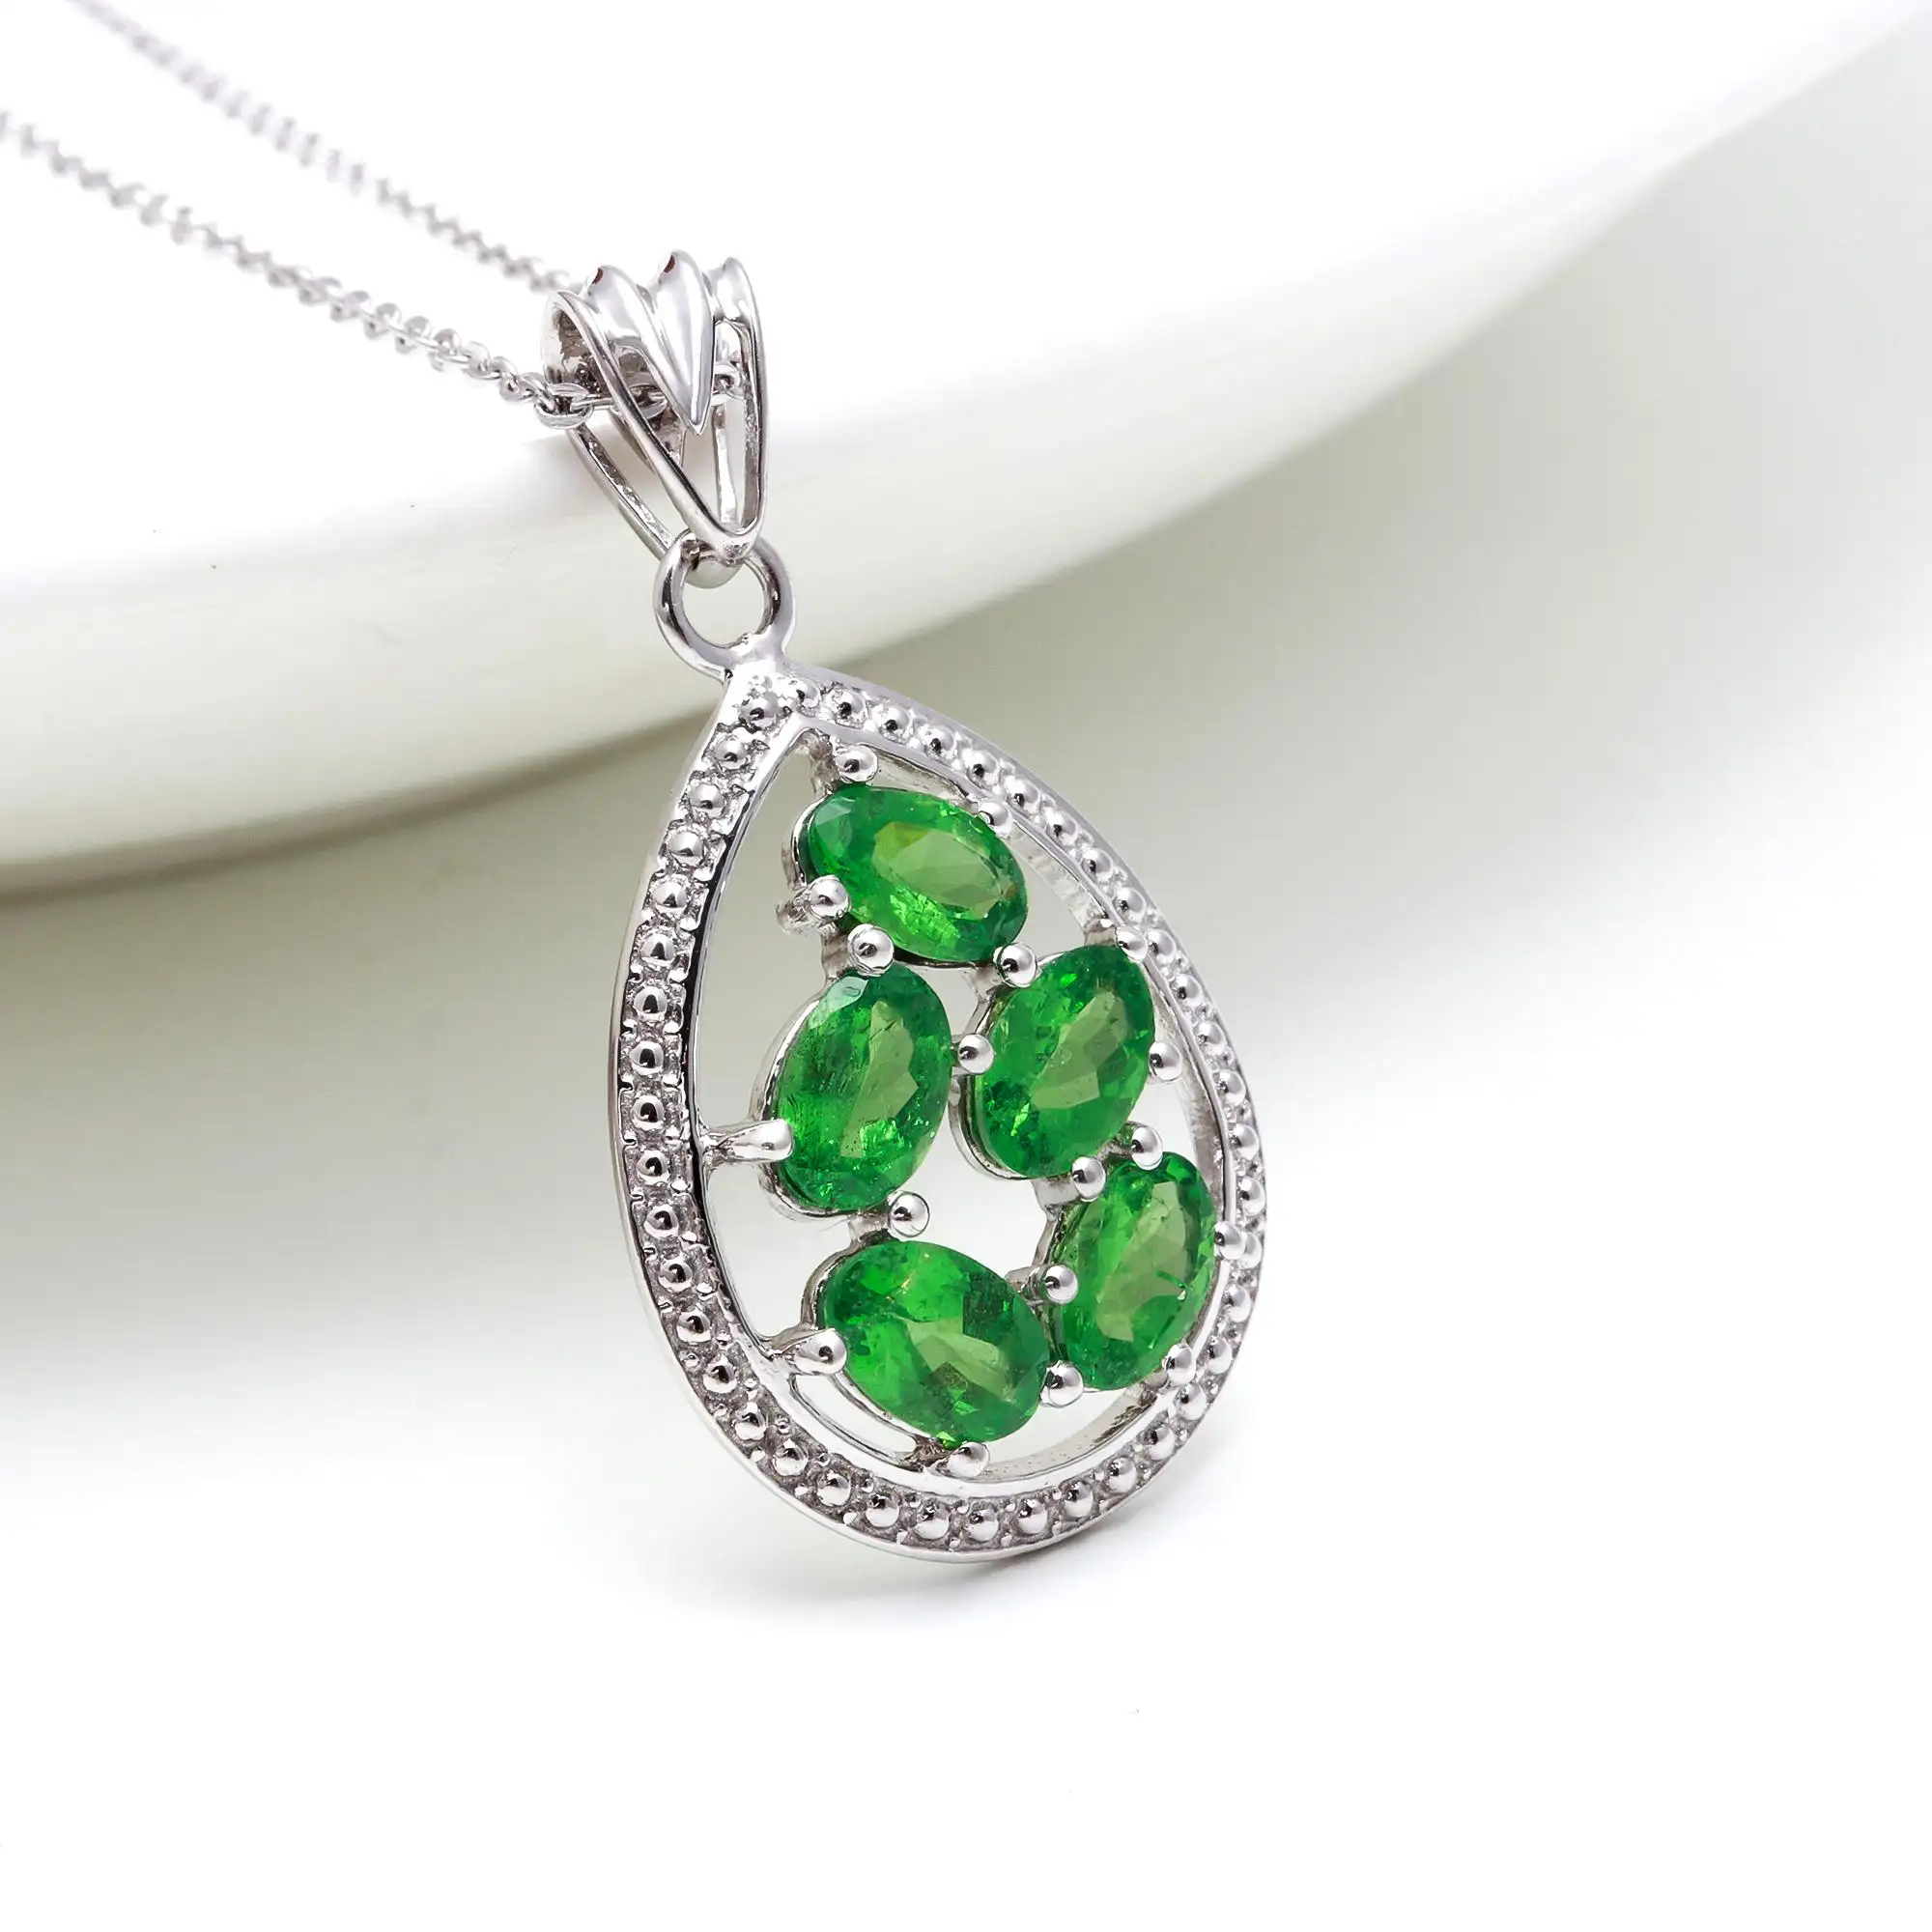 Ovale Form Tsavorit Halskette Multi Stone Sterling Silber Teardrop Halskette Fine Jewelry Statement Grüne Tsavorite Halskette